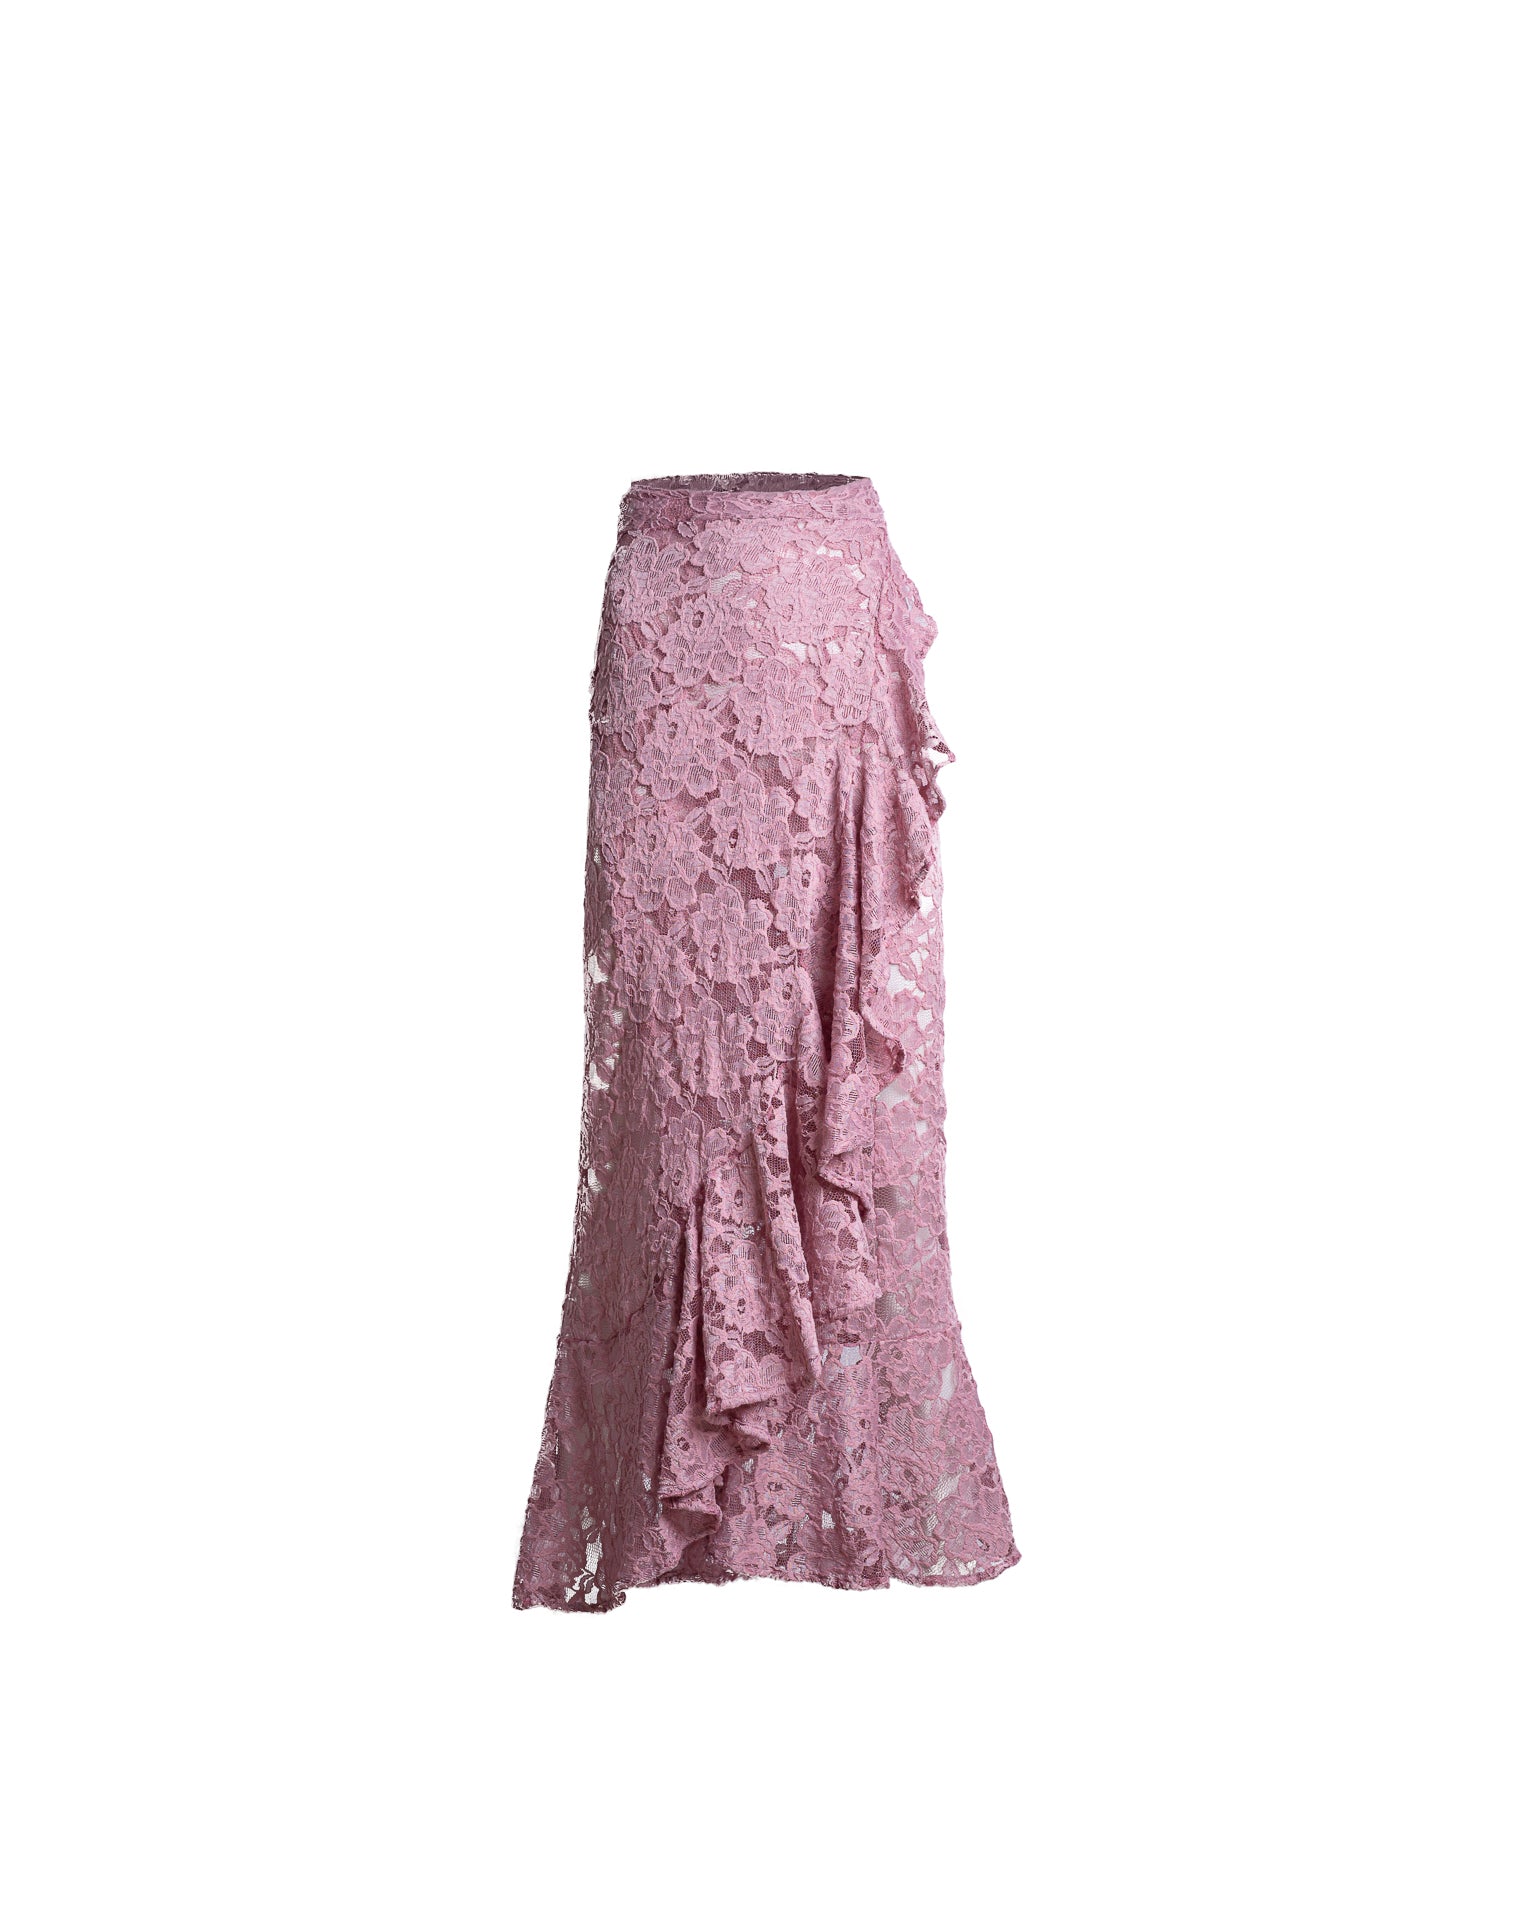 Antigua Skirt Maxi Lola Light Purple Lace